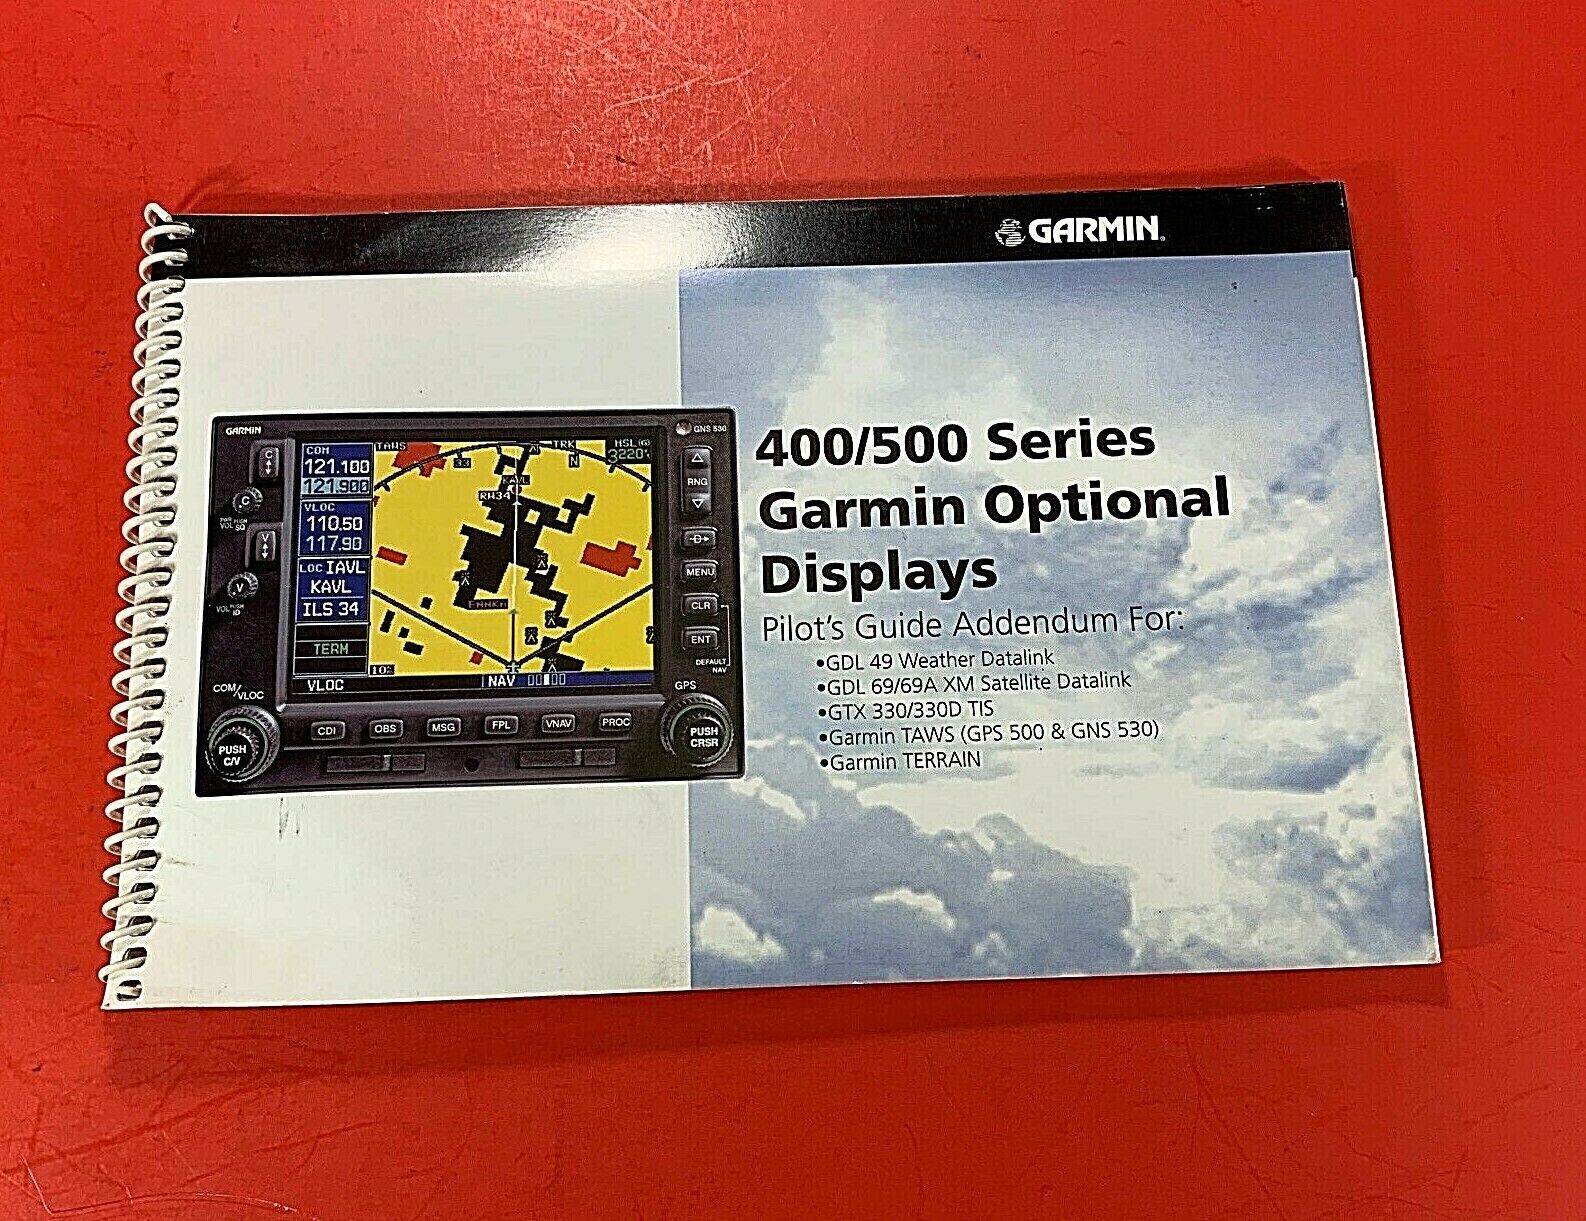 2005 Garmin 400 500 Series Optional Displays Pilot's Guide Addendum 190-00140-13